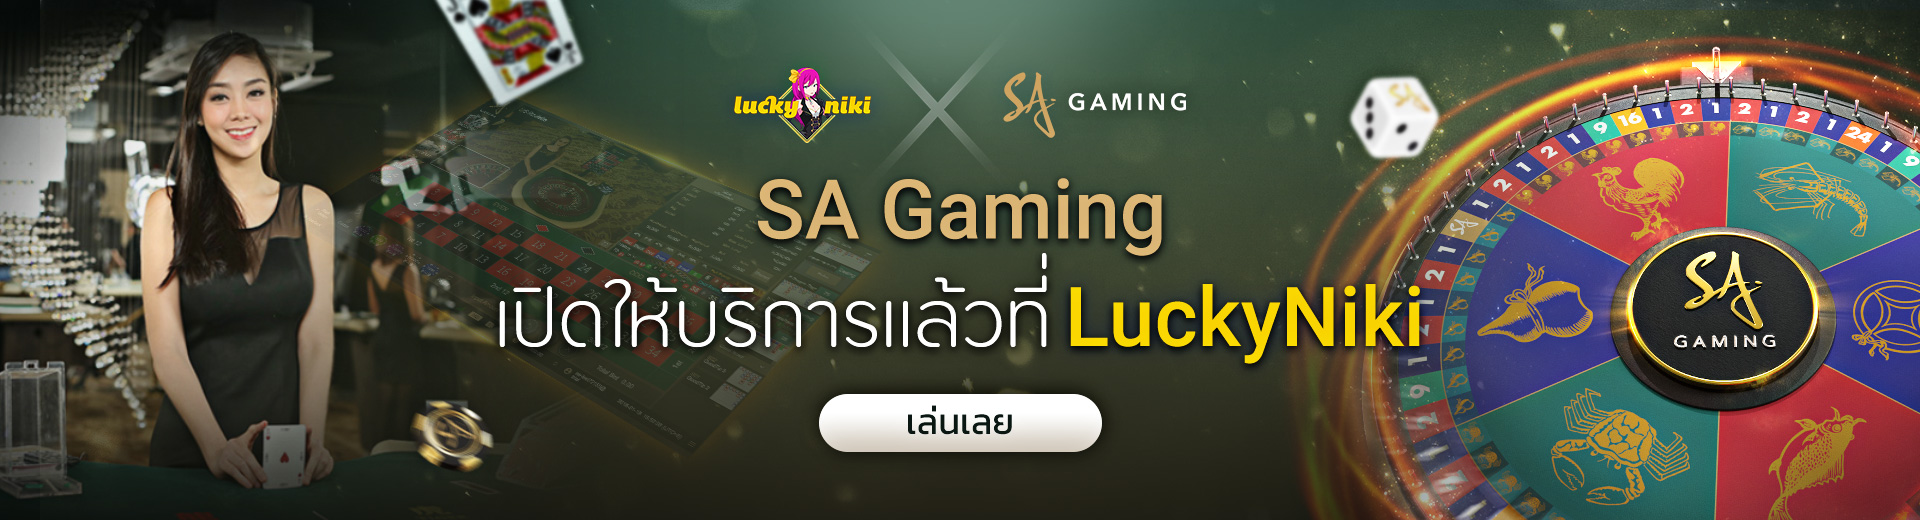 SA Gaming เปิดให้บริการแล้ววันนี้ที่ LuckyNiki